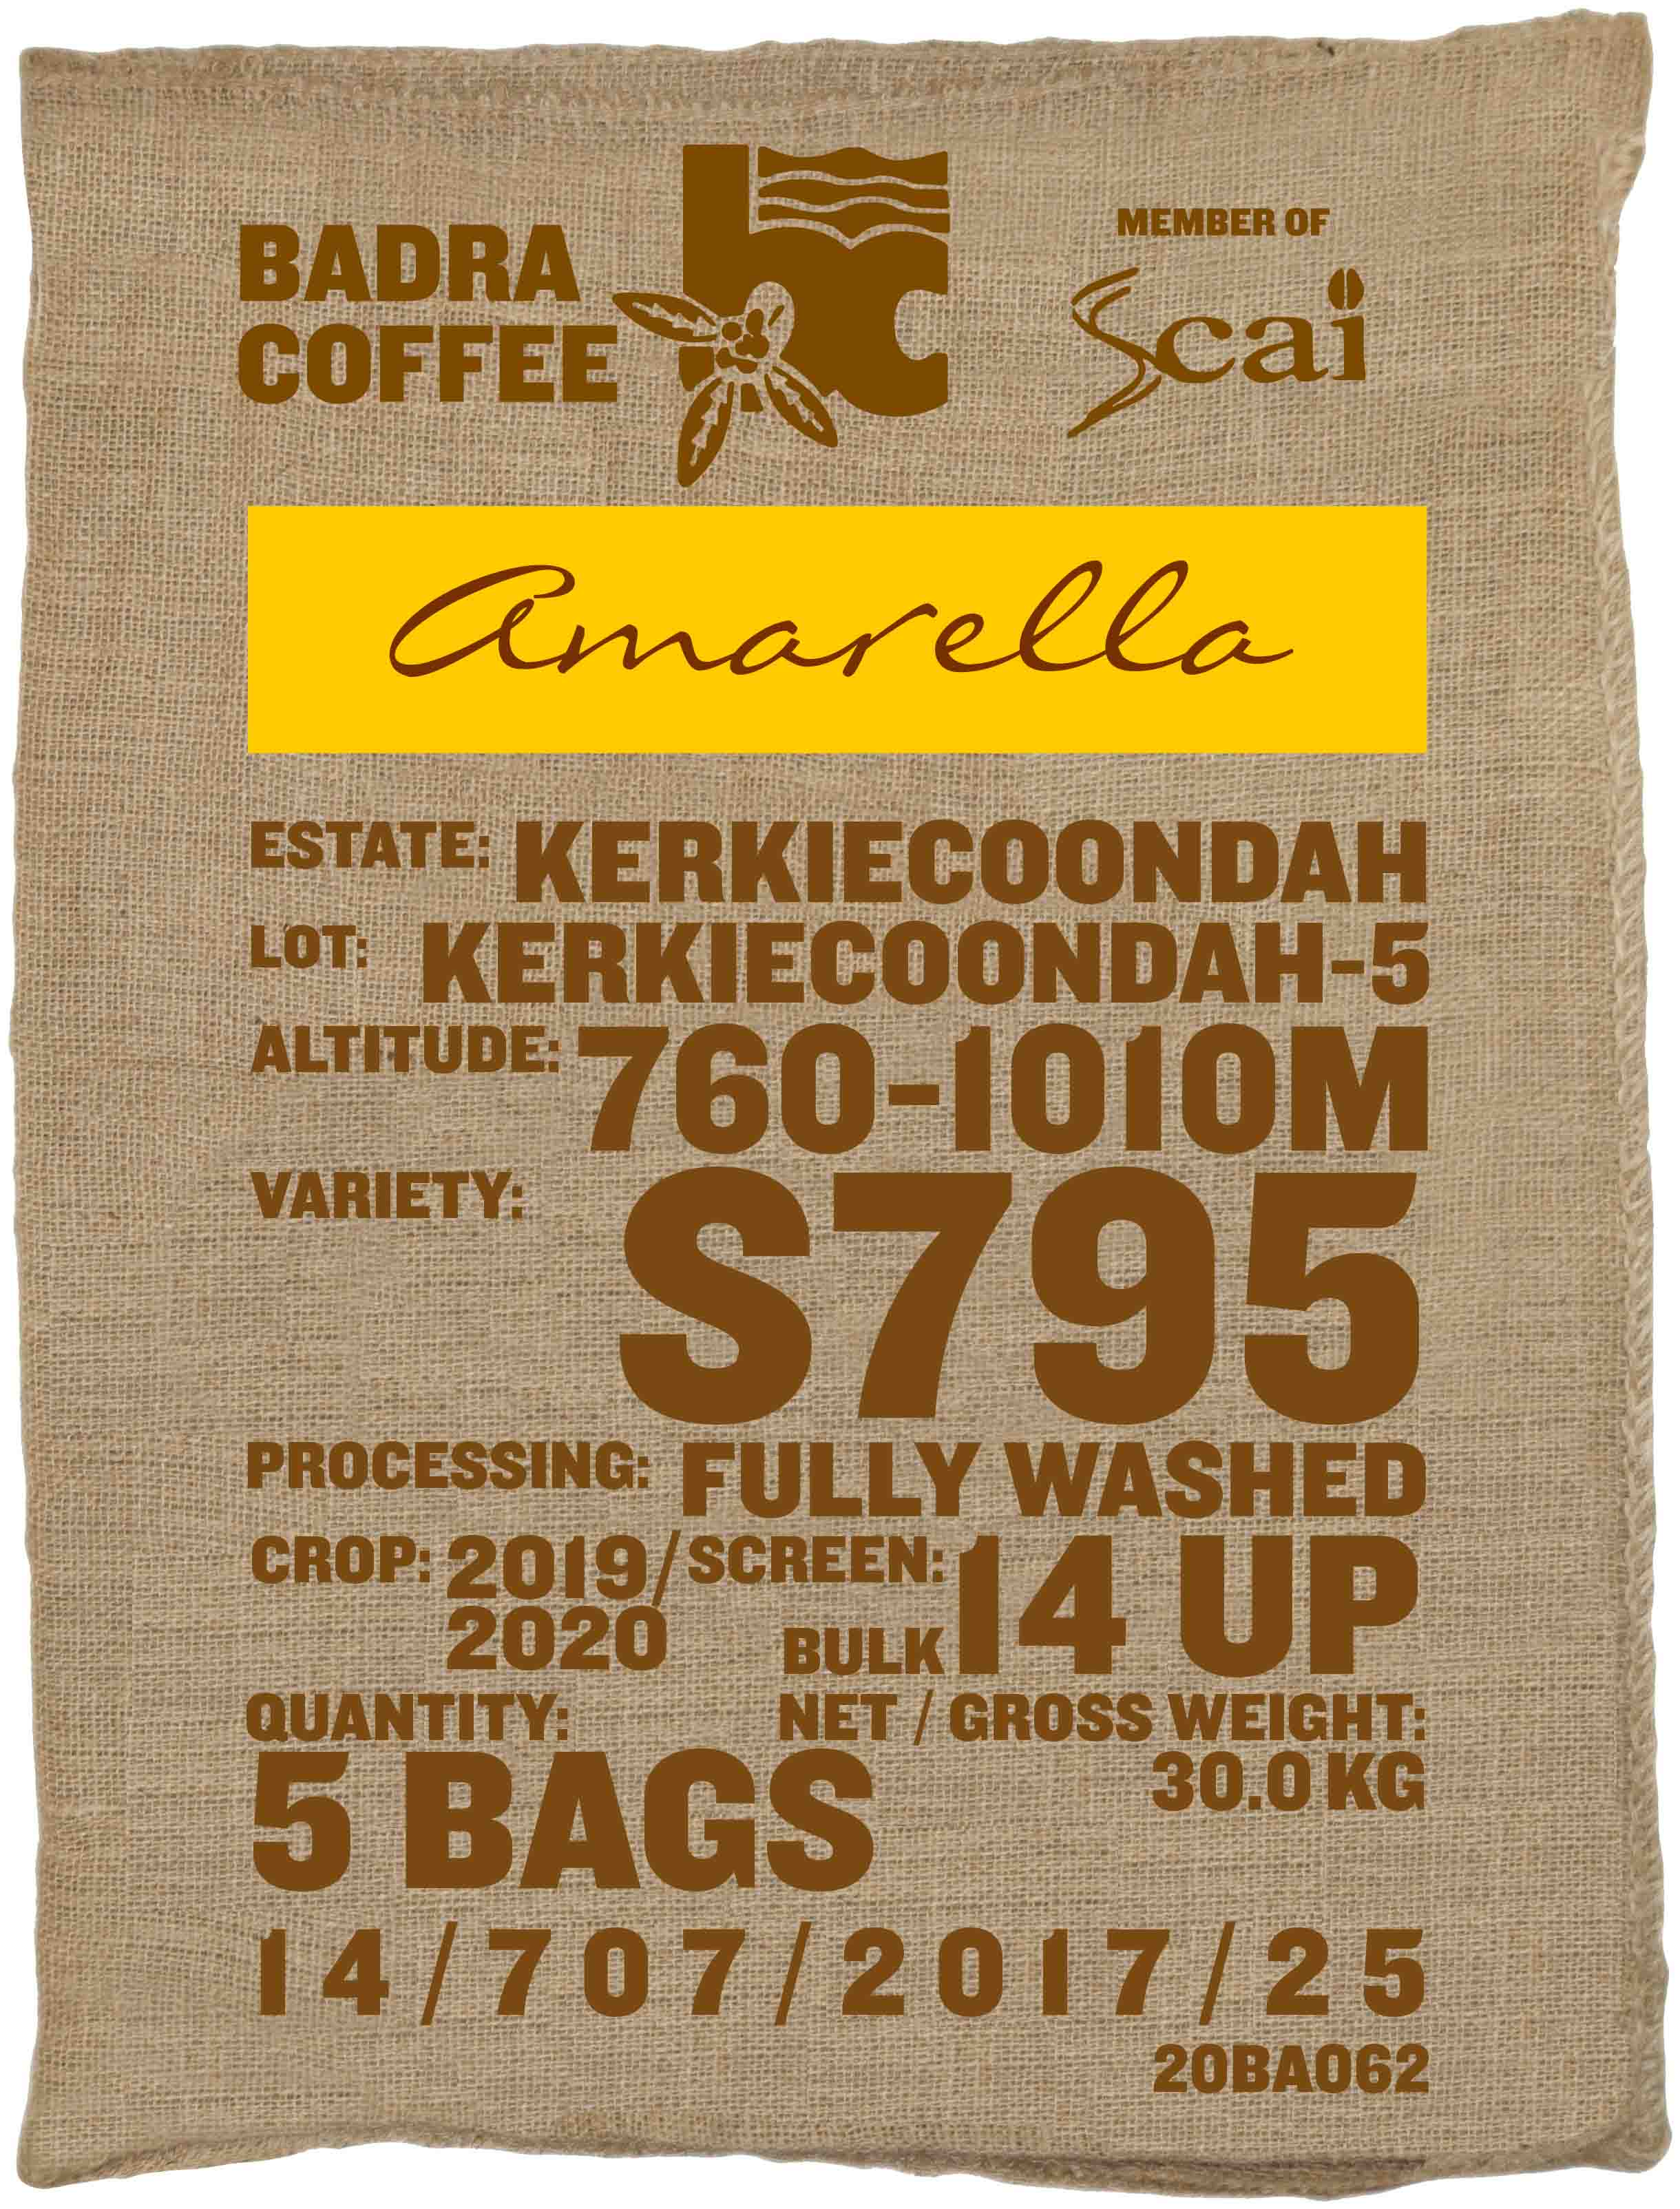 Ein Rohkaffeesack amarella Parzellenkaffee Varietät S795. Badra Estates Lot Kerkiecoondah 5.